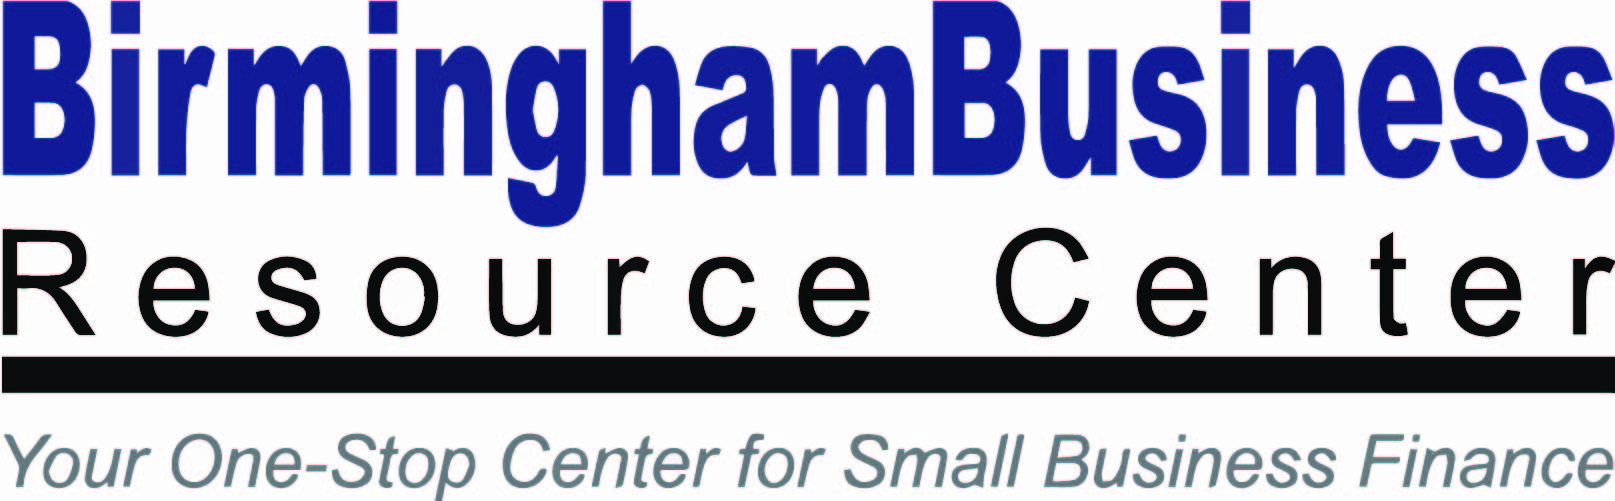 Birmingham Business Resource Center logo